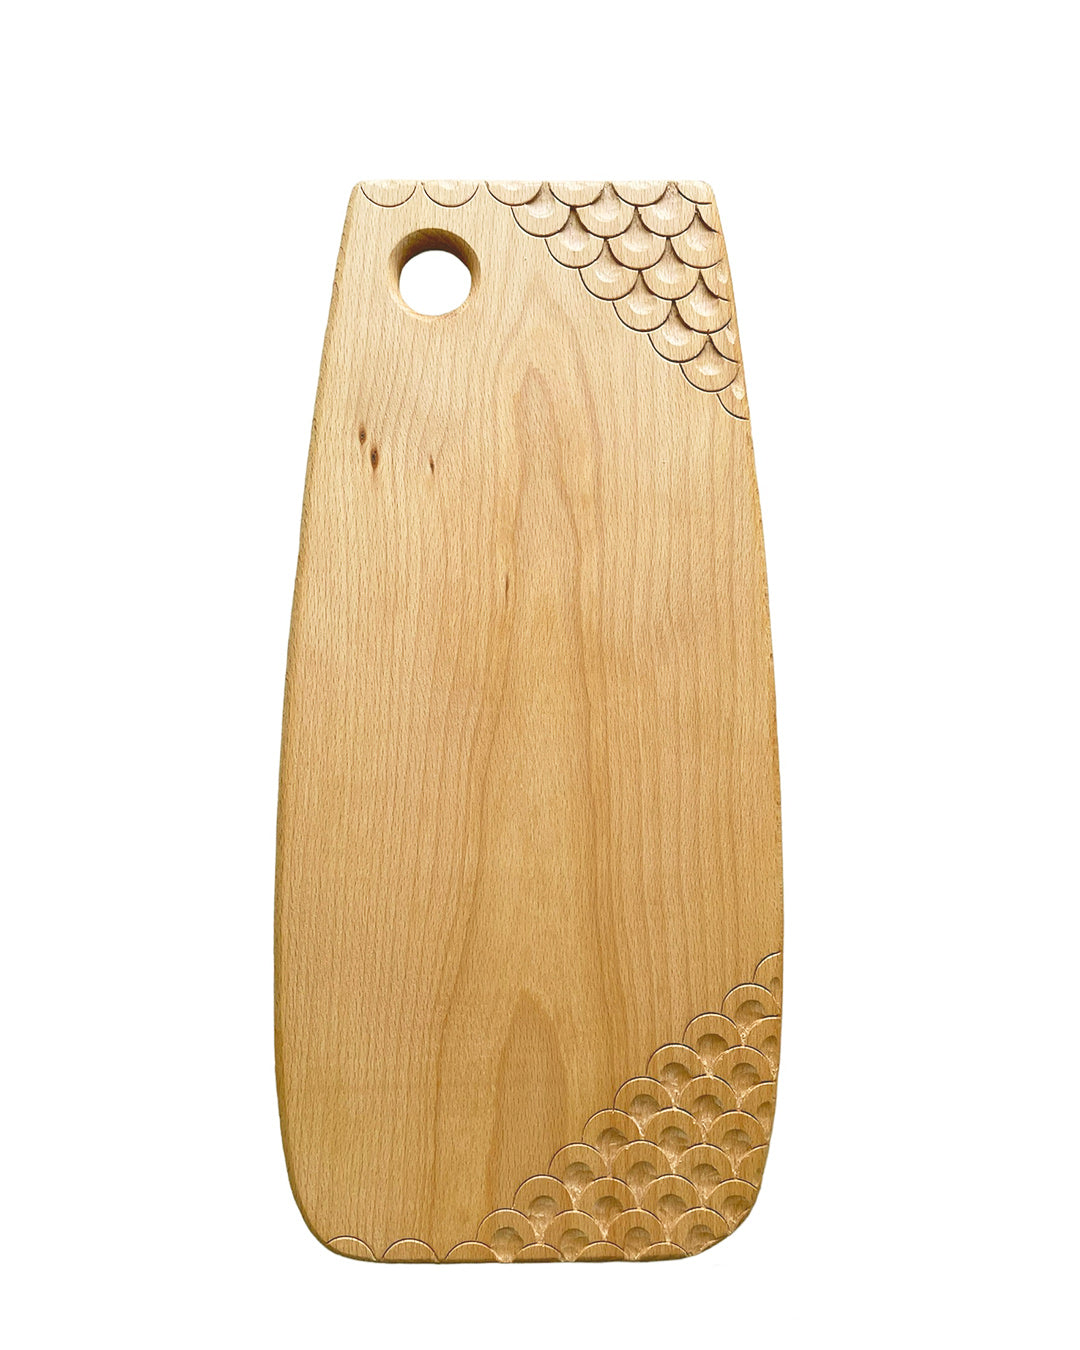  Handmade chopping board - Andor Studio